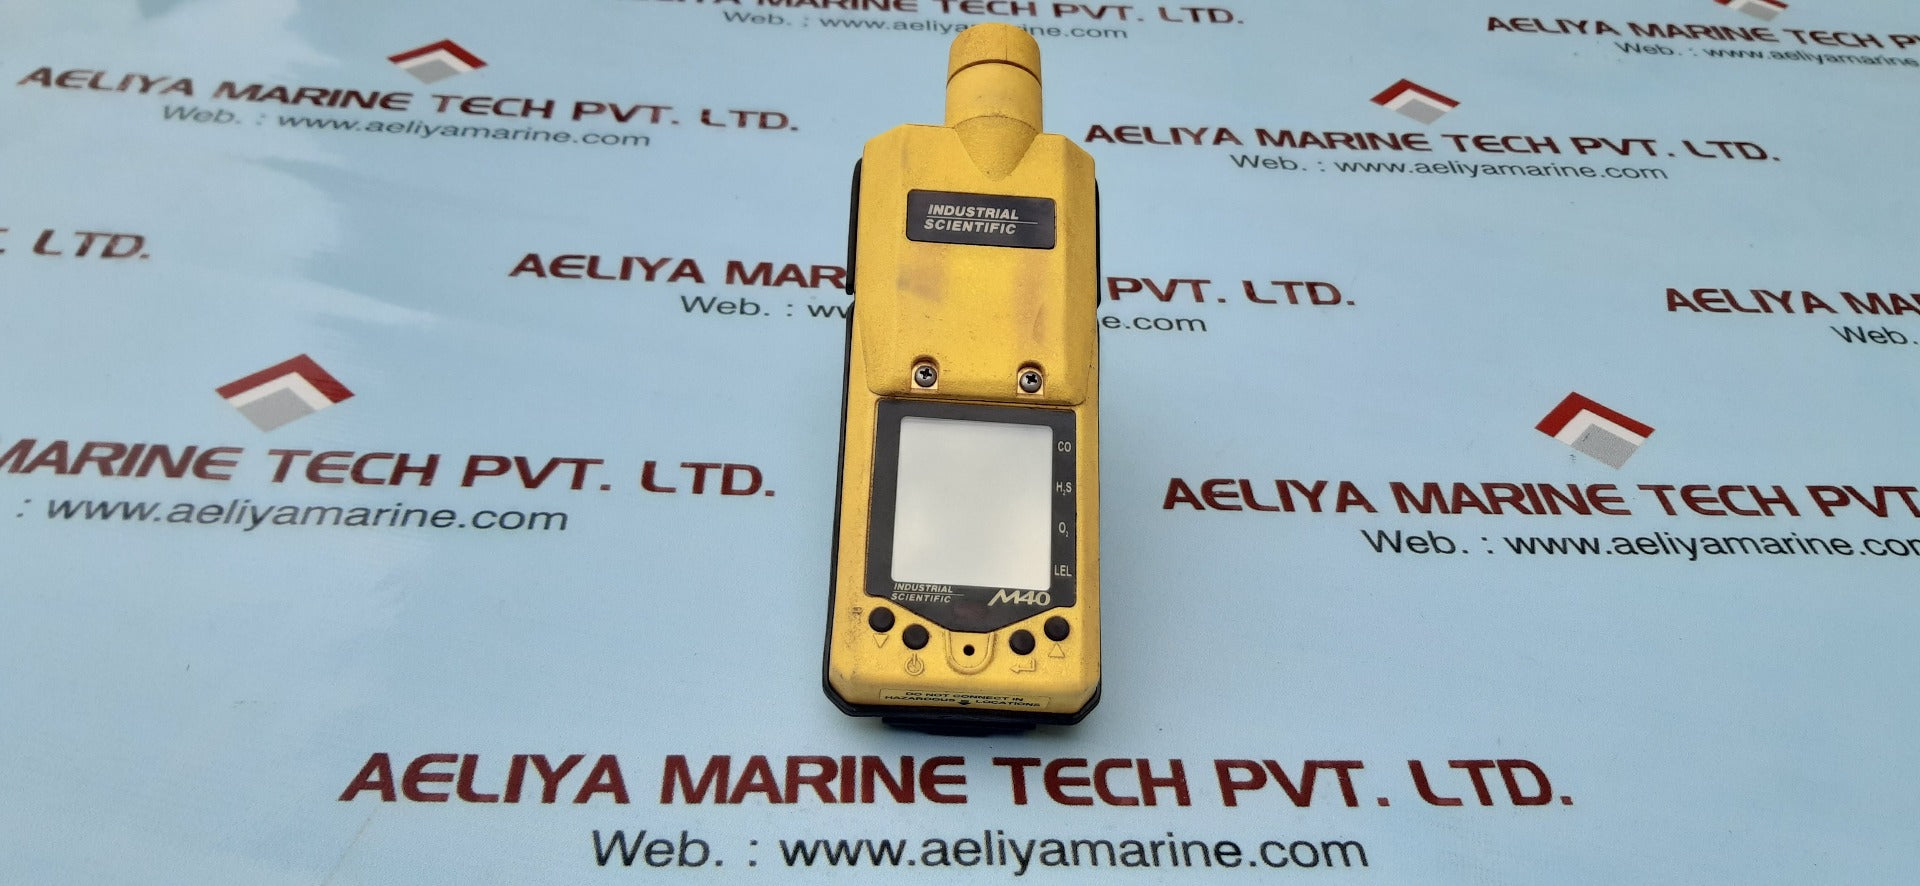 Industrial scientific m40 multi gas monitor meter/ sample pump sp40